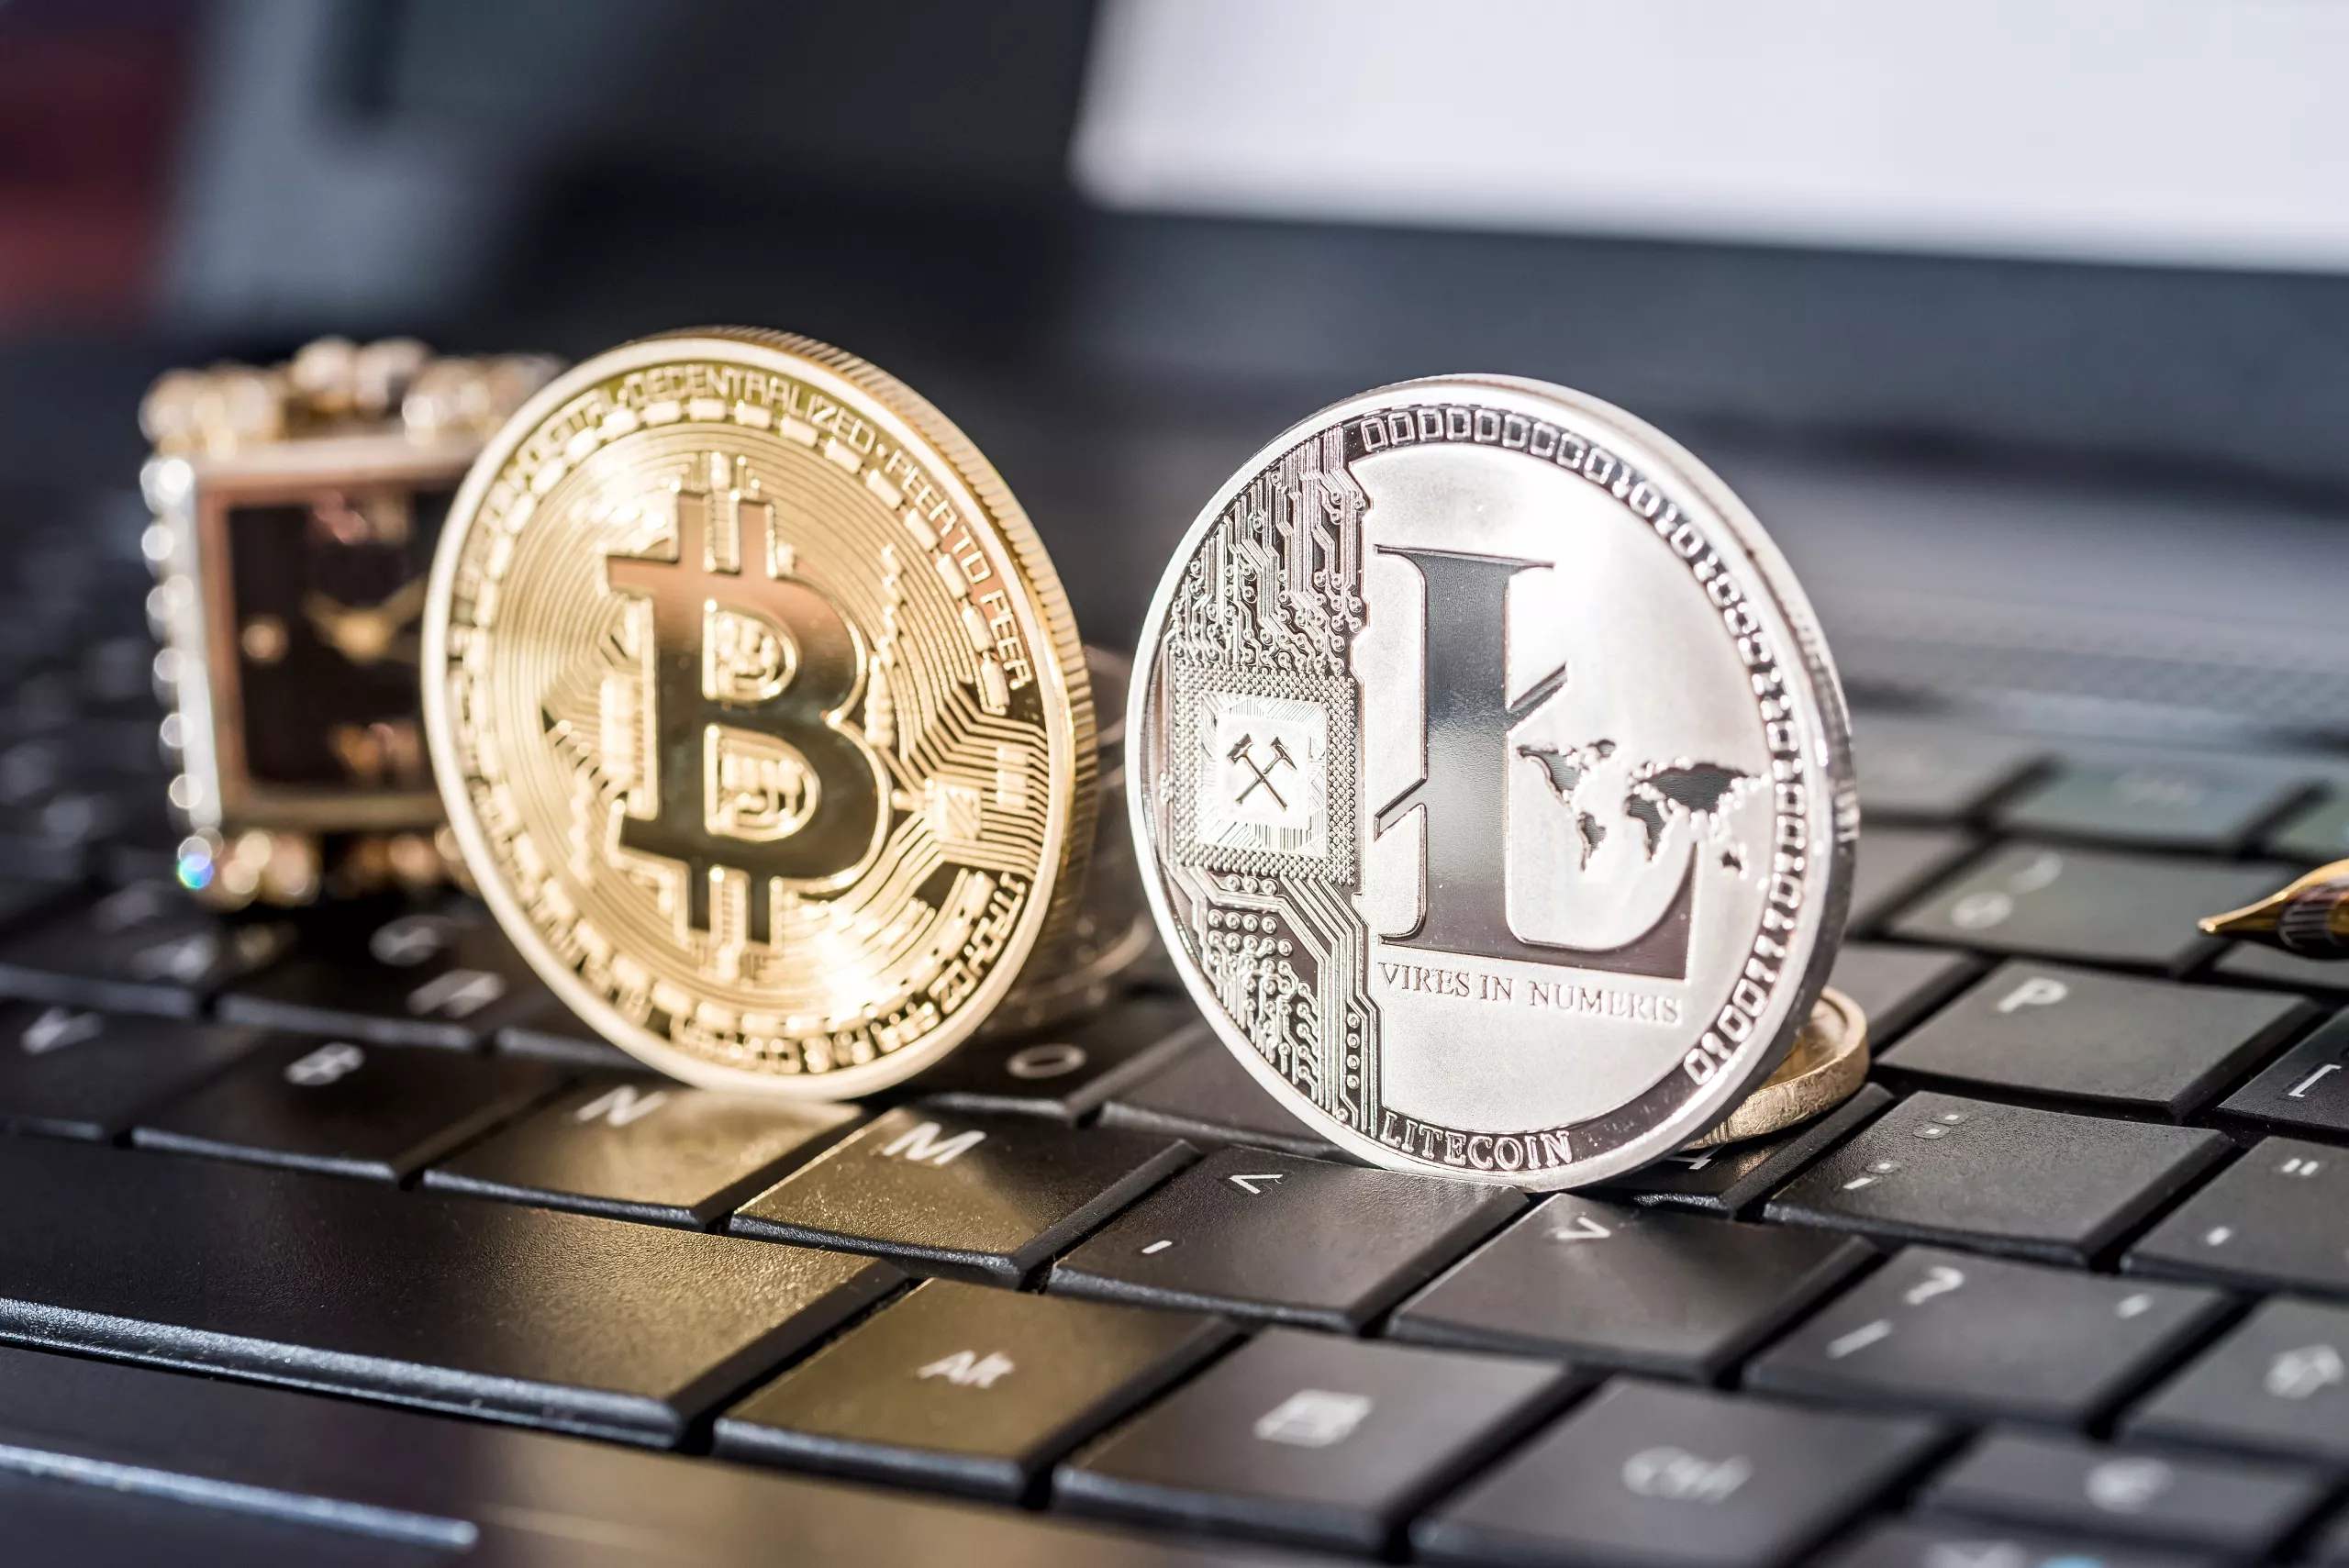 bitcoin and litecoin